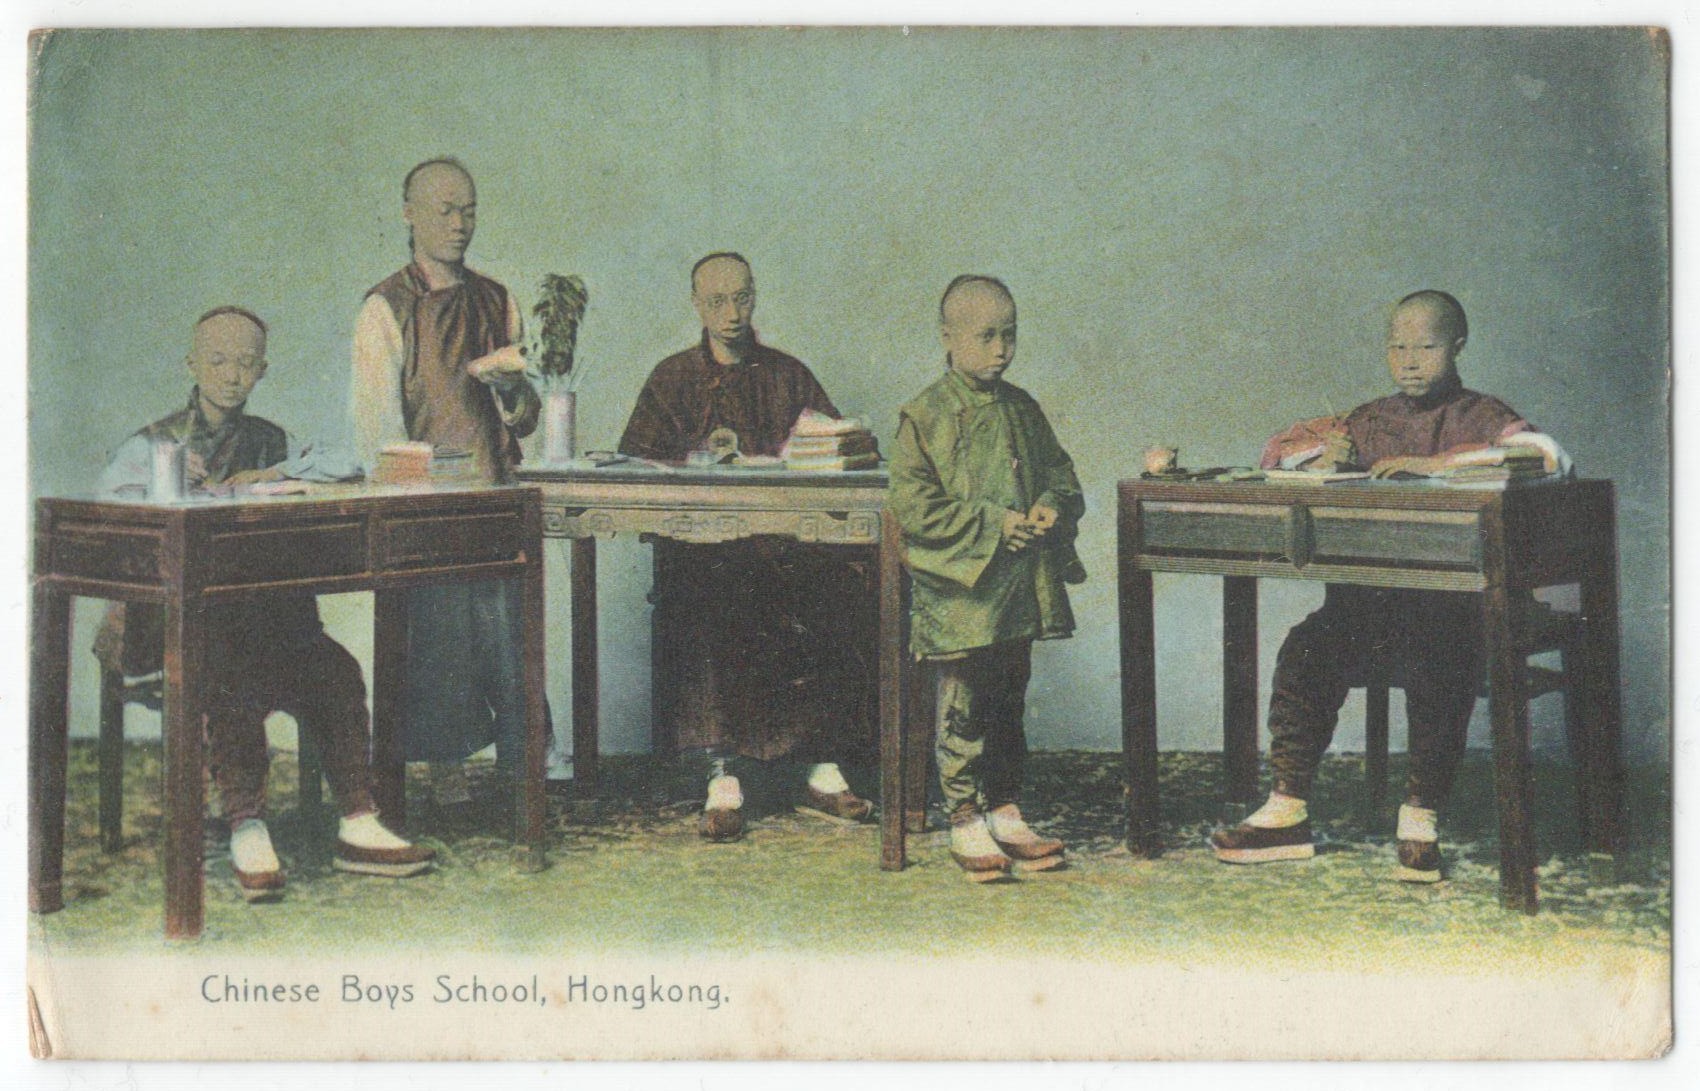 CHINESE BOYS SCHOOL HONGKONG - POSTED POSTCARD TEMPORARY P.O. CHOWRASTA 1908